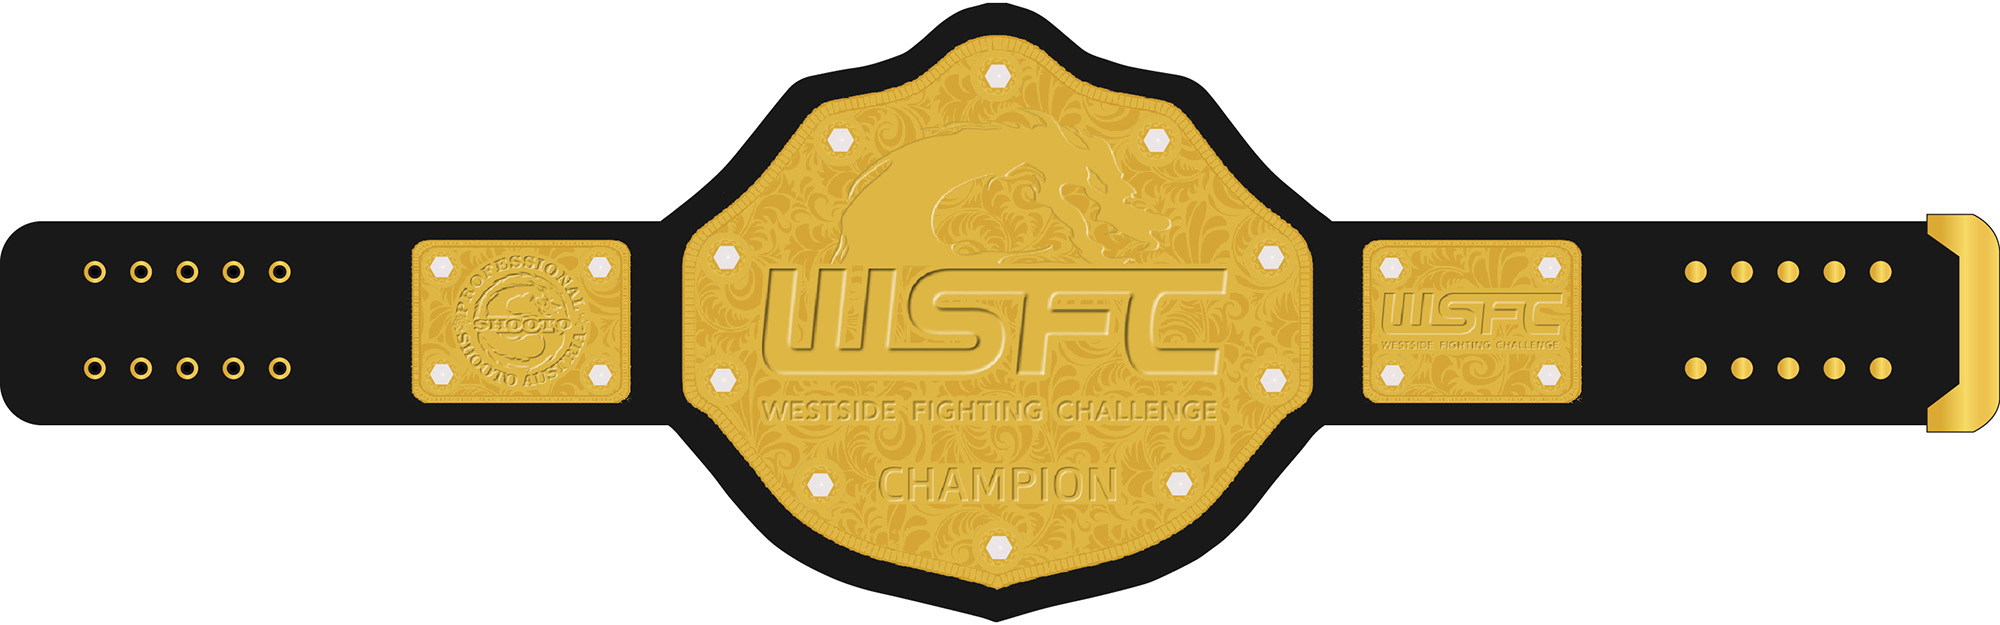 WSFC Westside Fighting Challenge Champion Grtel